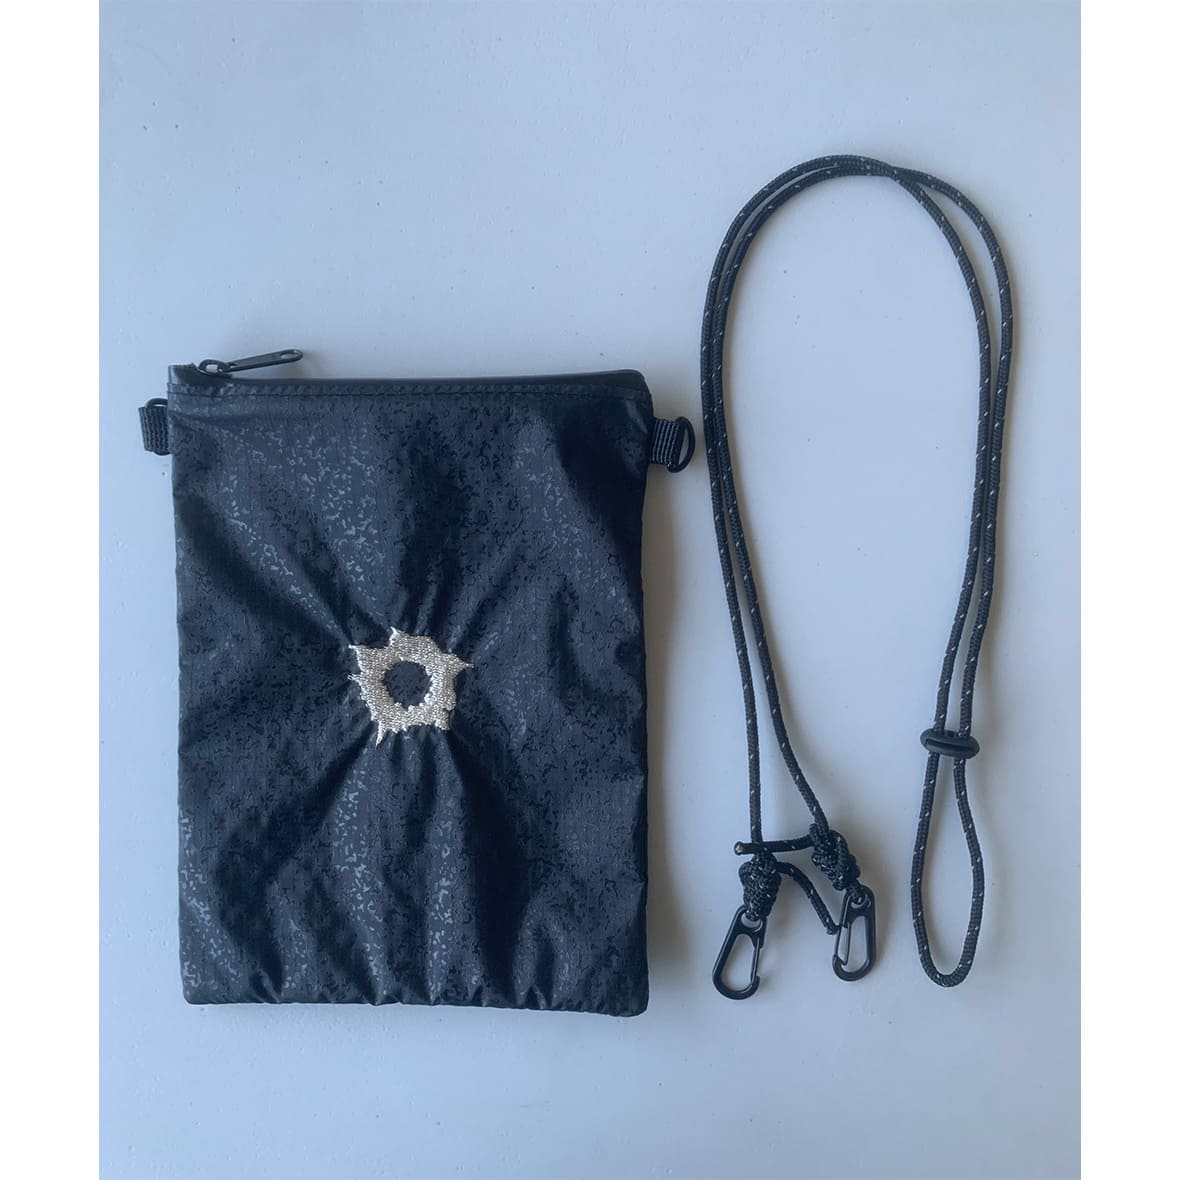 Portable Gripstop Nylon Bag (品番CPSEW003-GN)